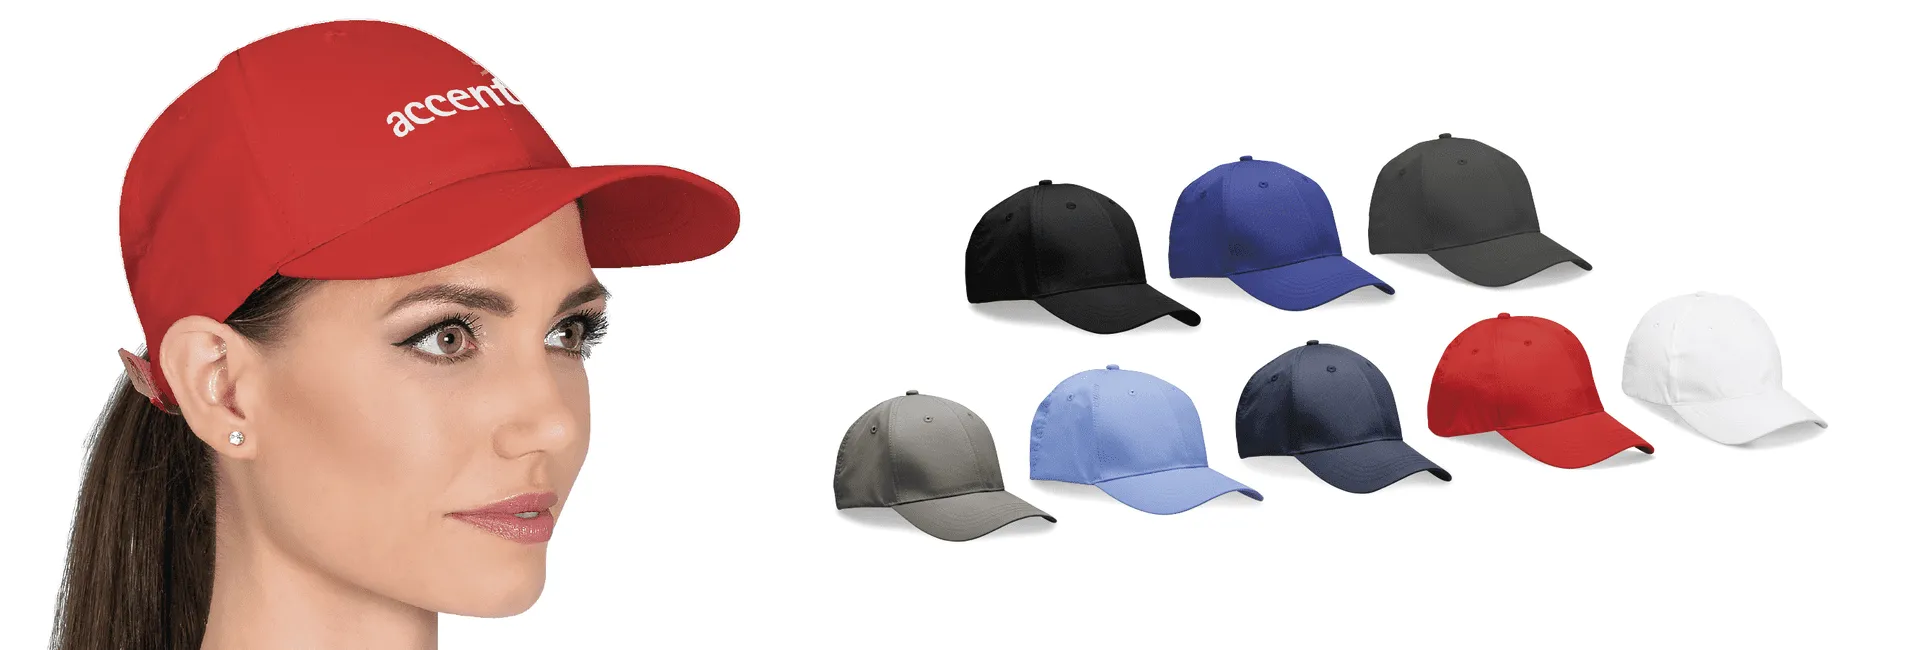 Caps, beanies, hats